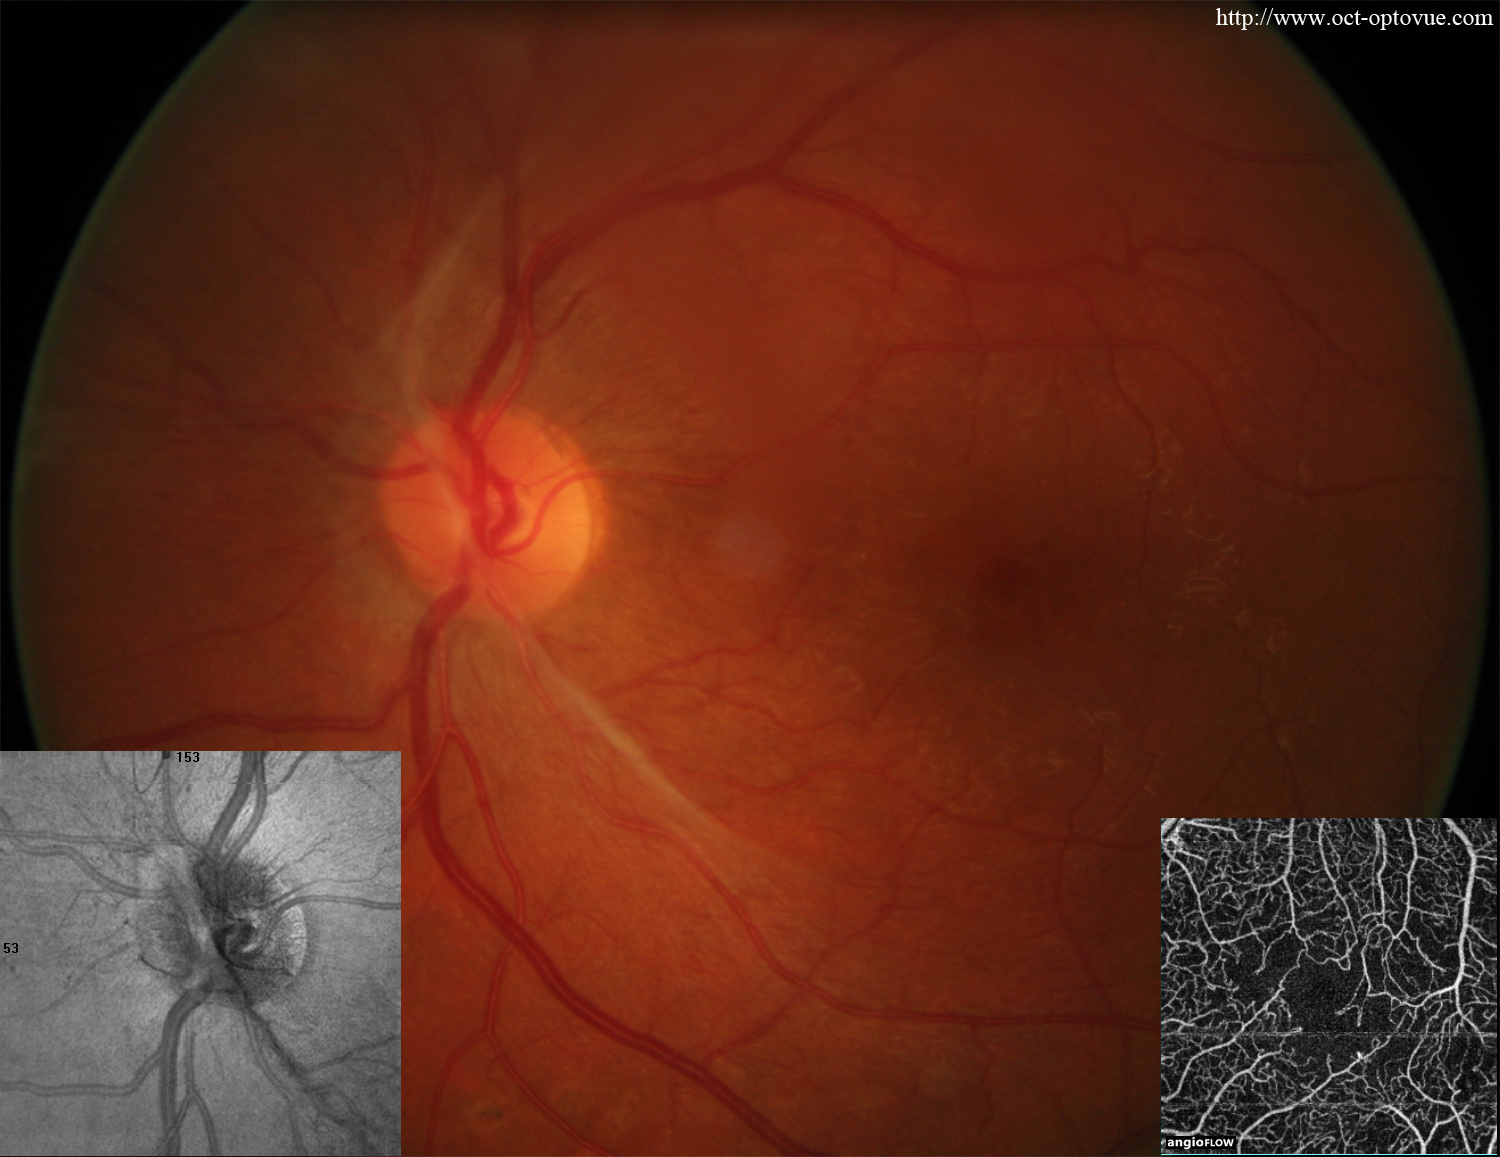 octa diabetes proliferative retinopathy